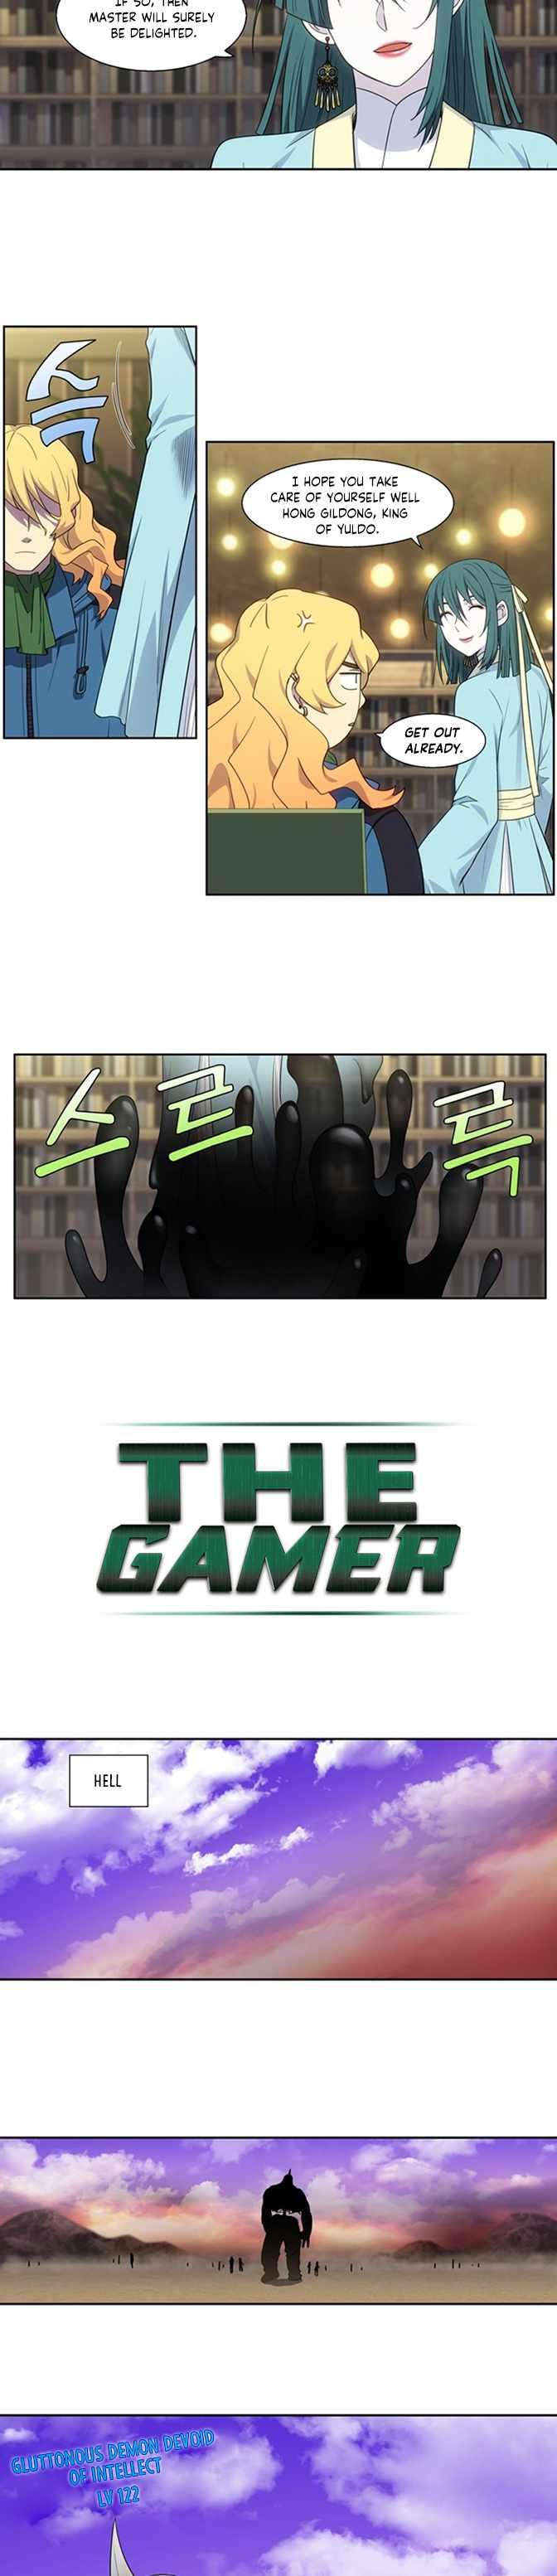 The Gamer - episode 399 - 6